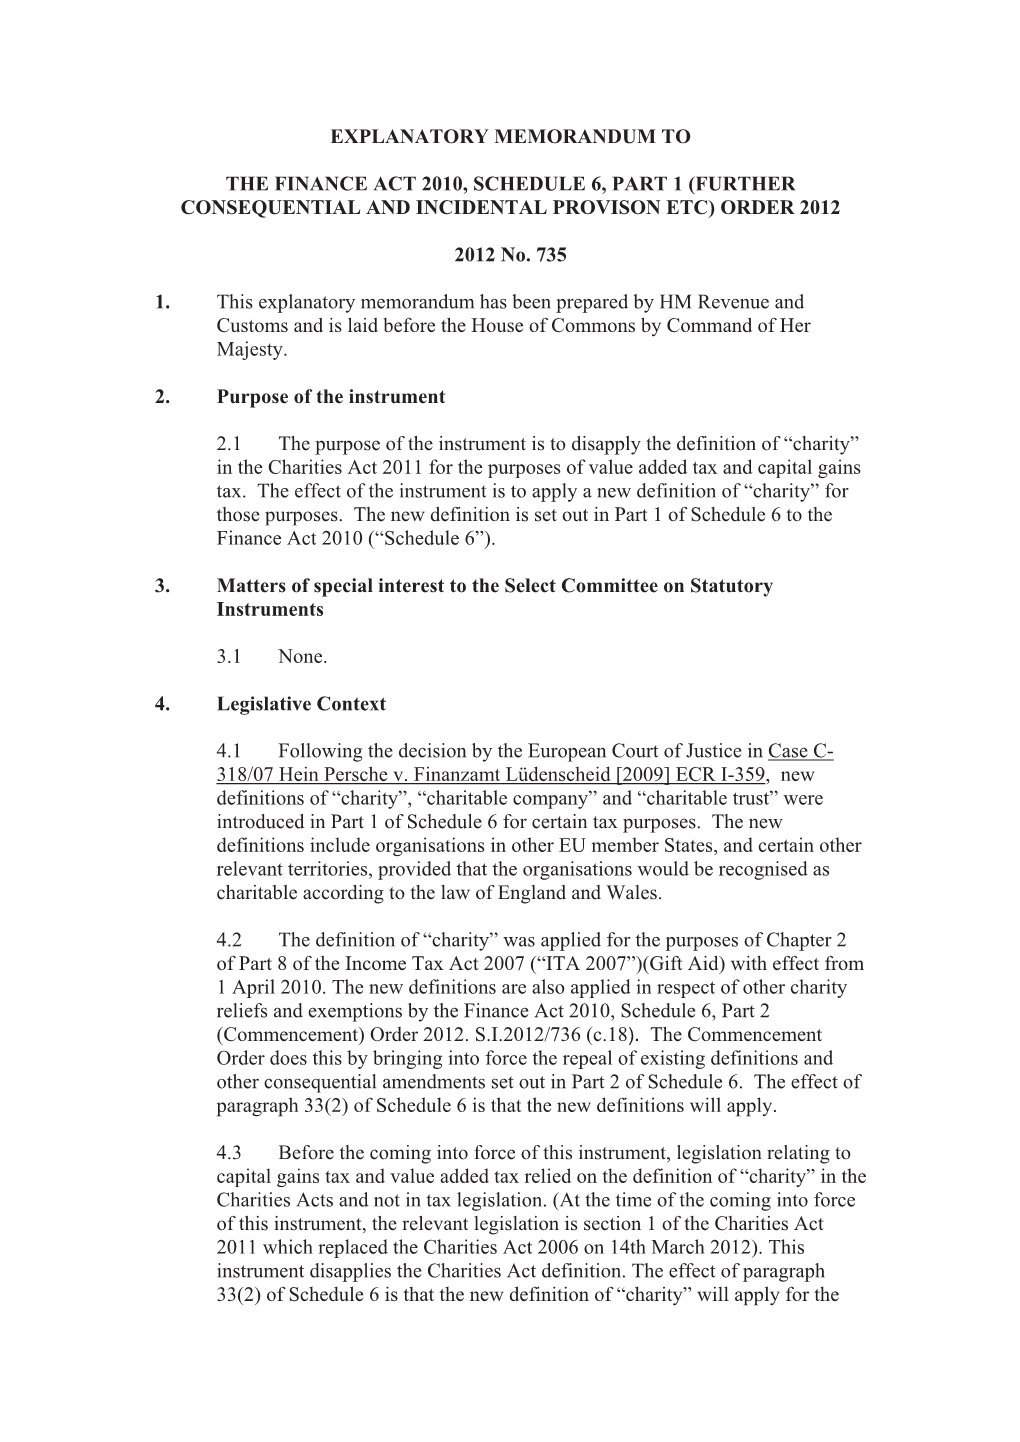 Explanatory Memorandum to the Finance Act 2010, Schedule 6, Part 1